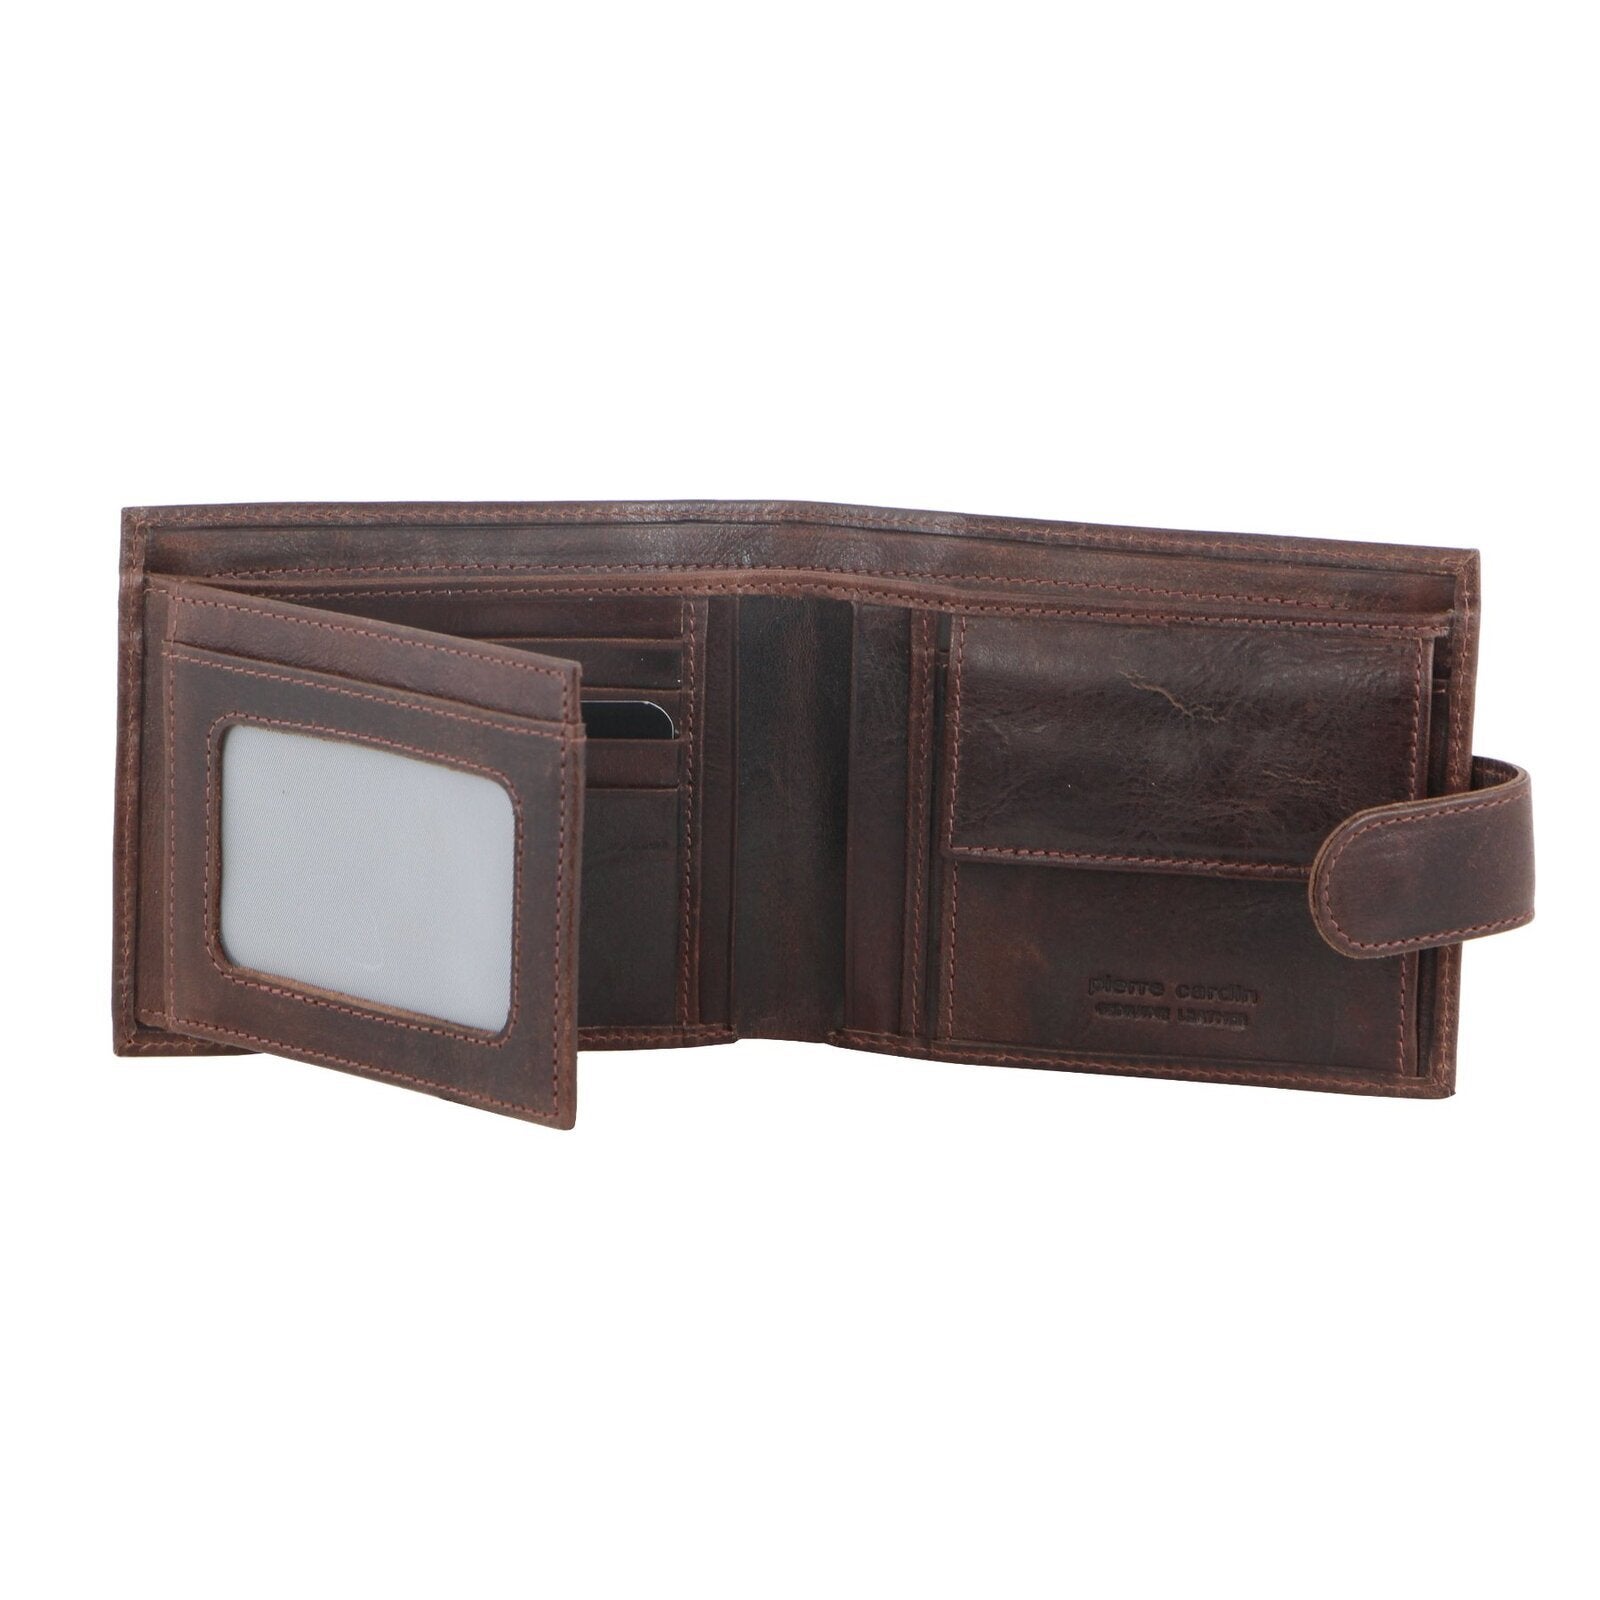 Pierre Cardin RFID Mens Wallet Bi-Fold Genuine Italian Leather w GIFT BOX - Brown